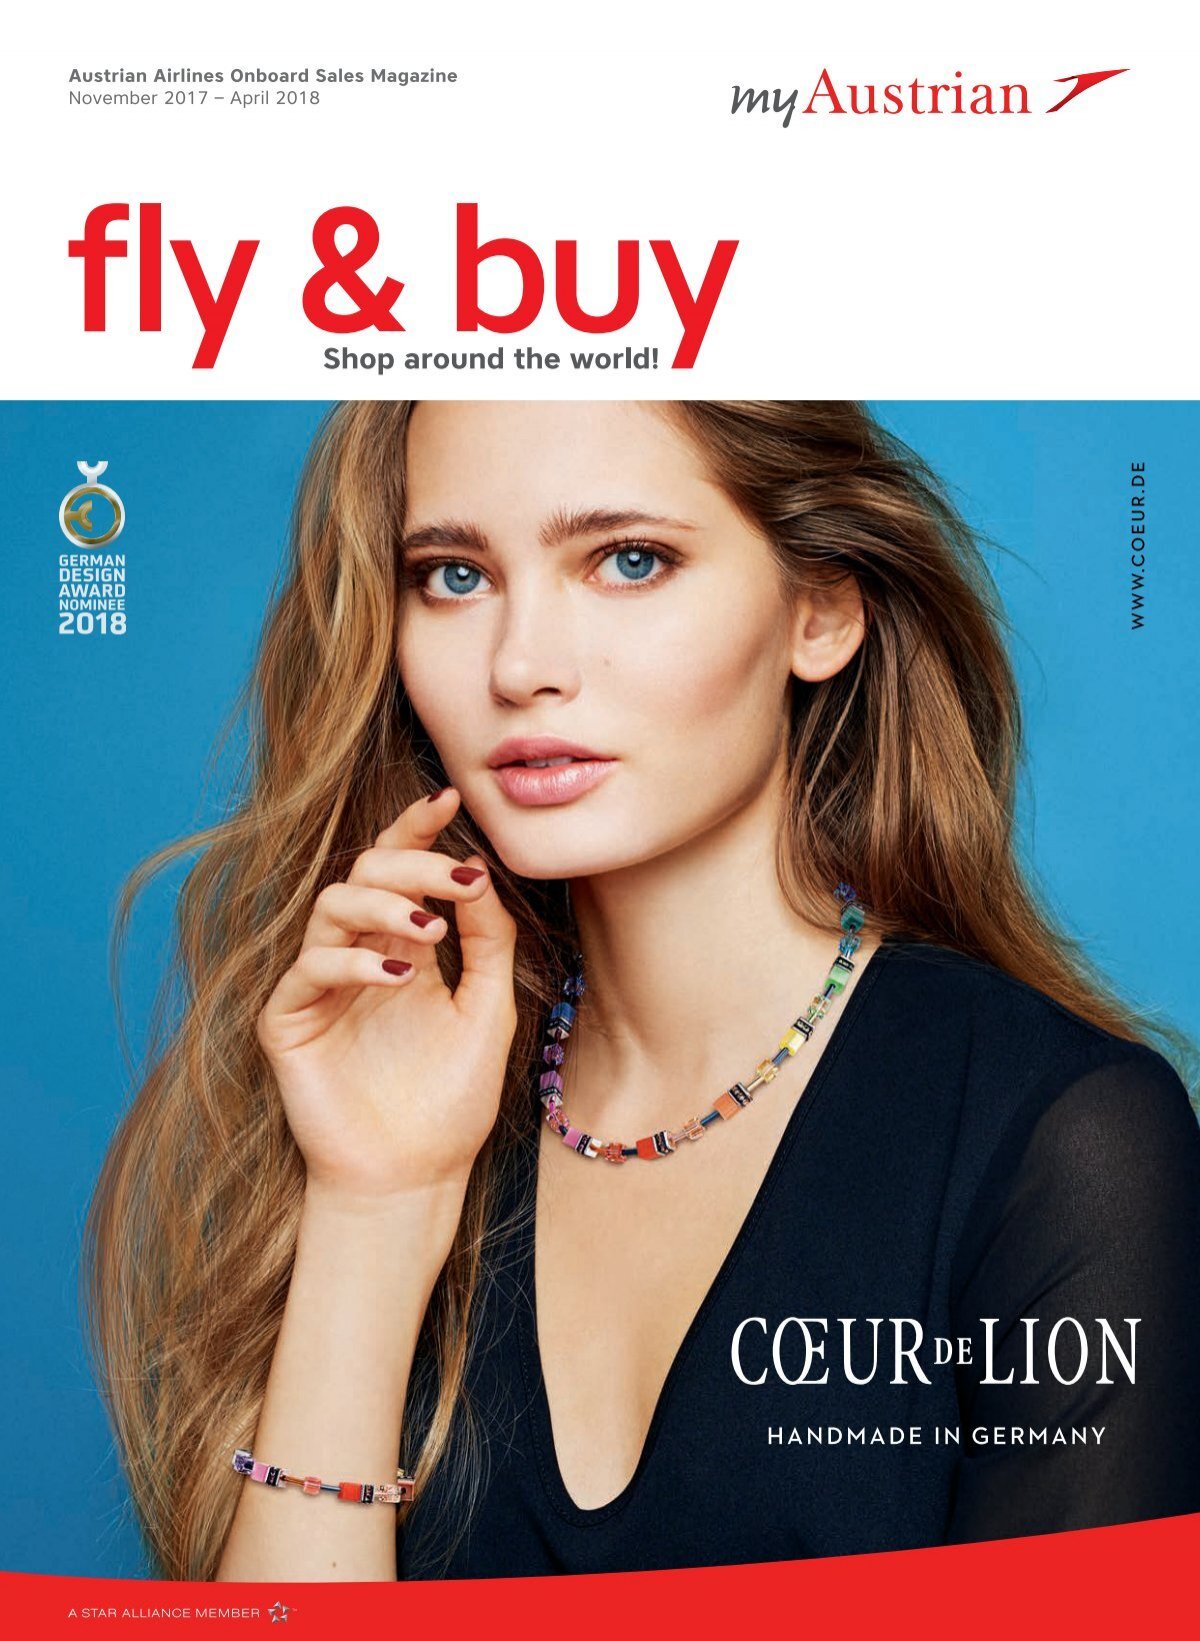 Austrian Airlines Onboard - Magazine, 2017 Sales 2018 November April